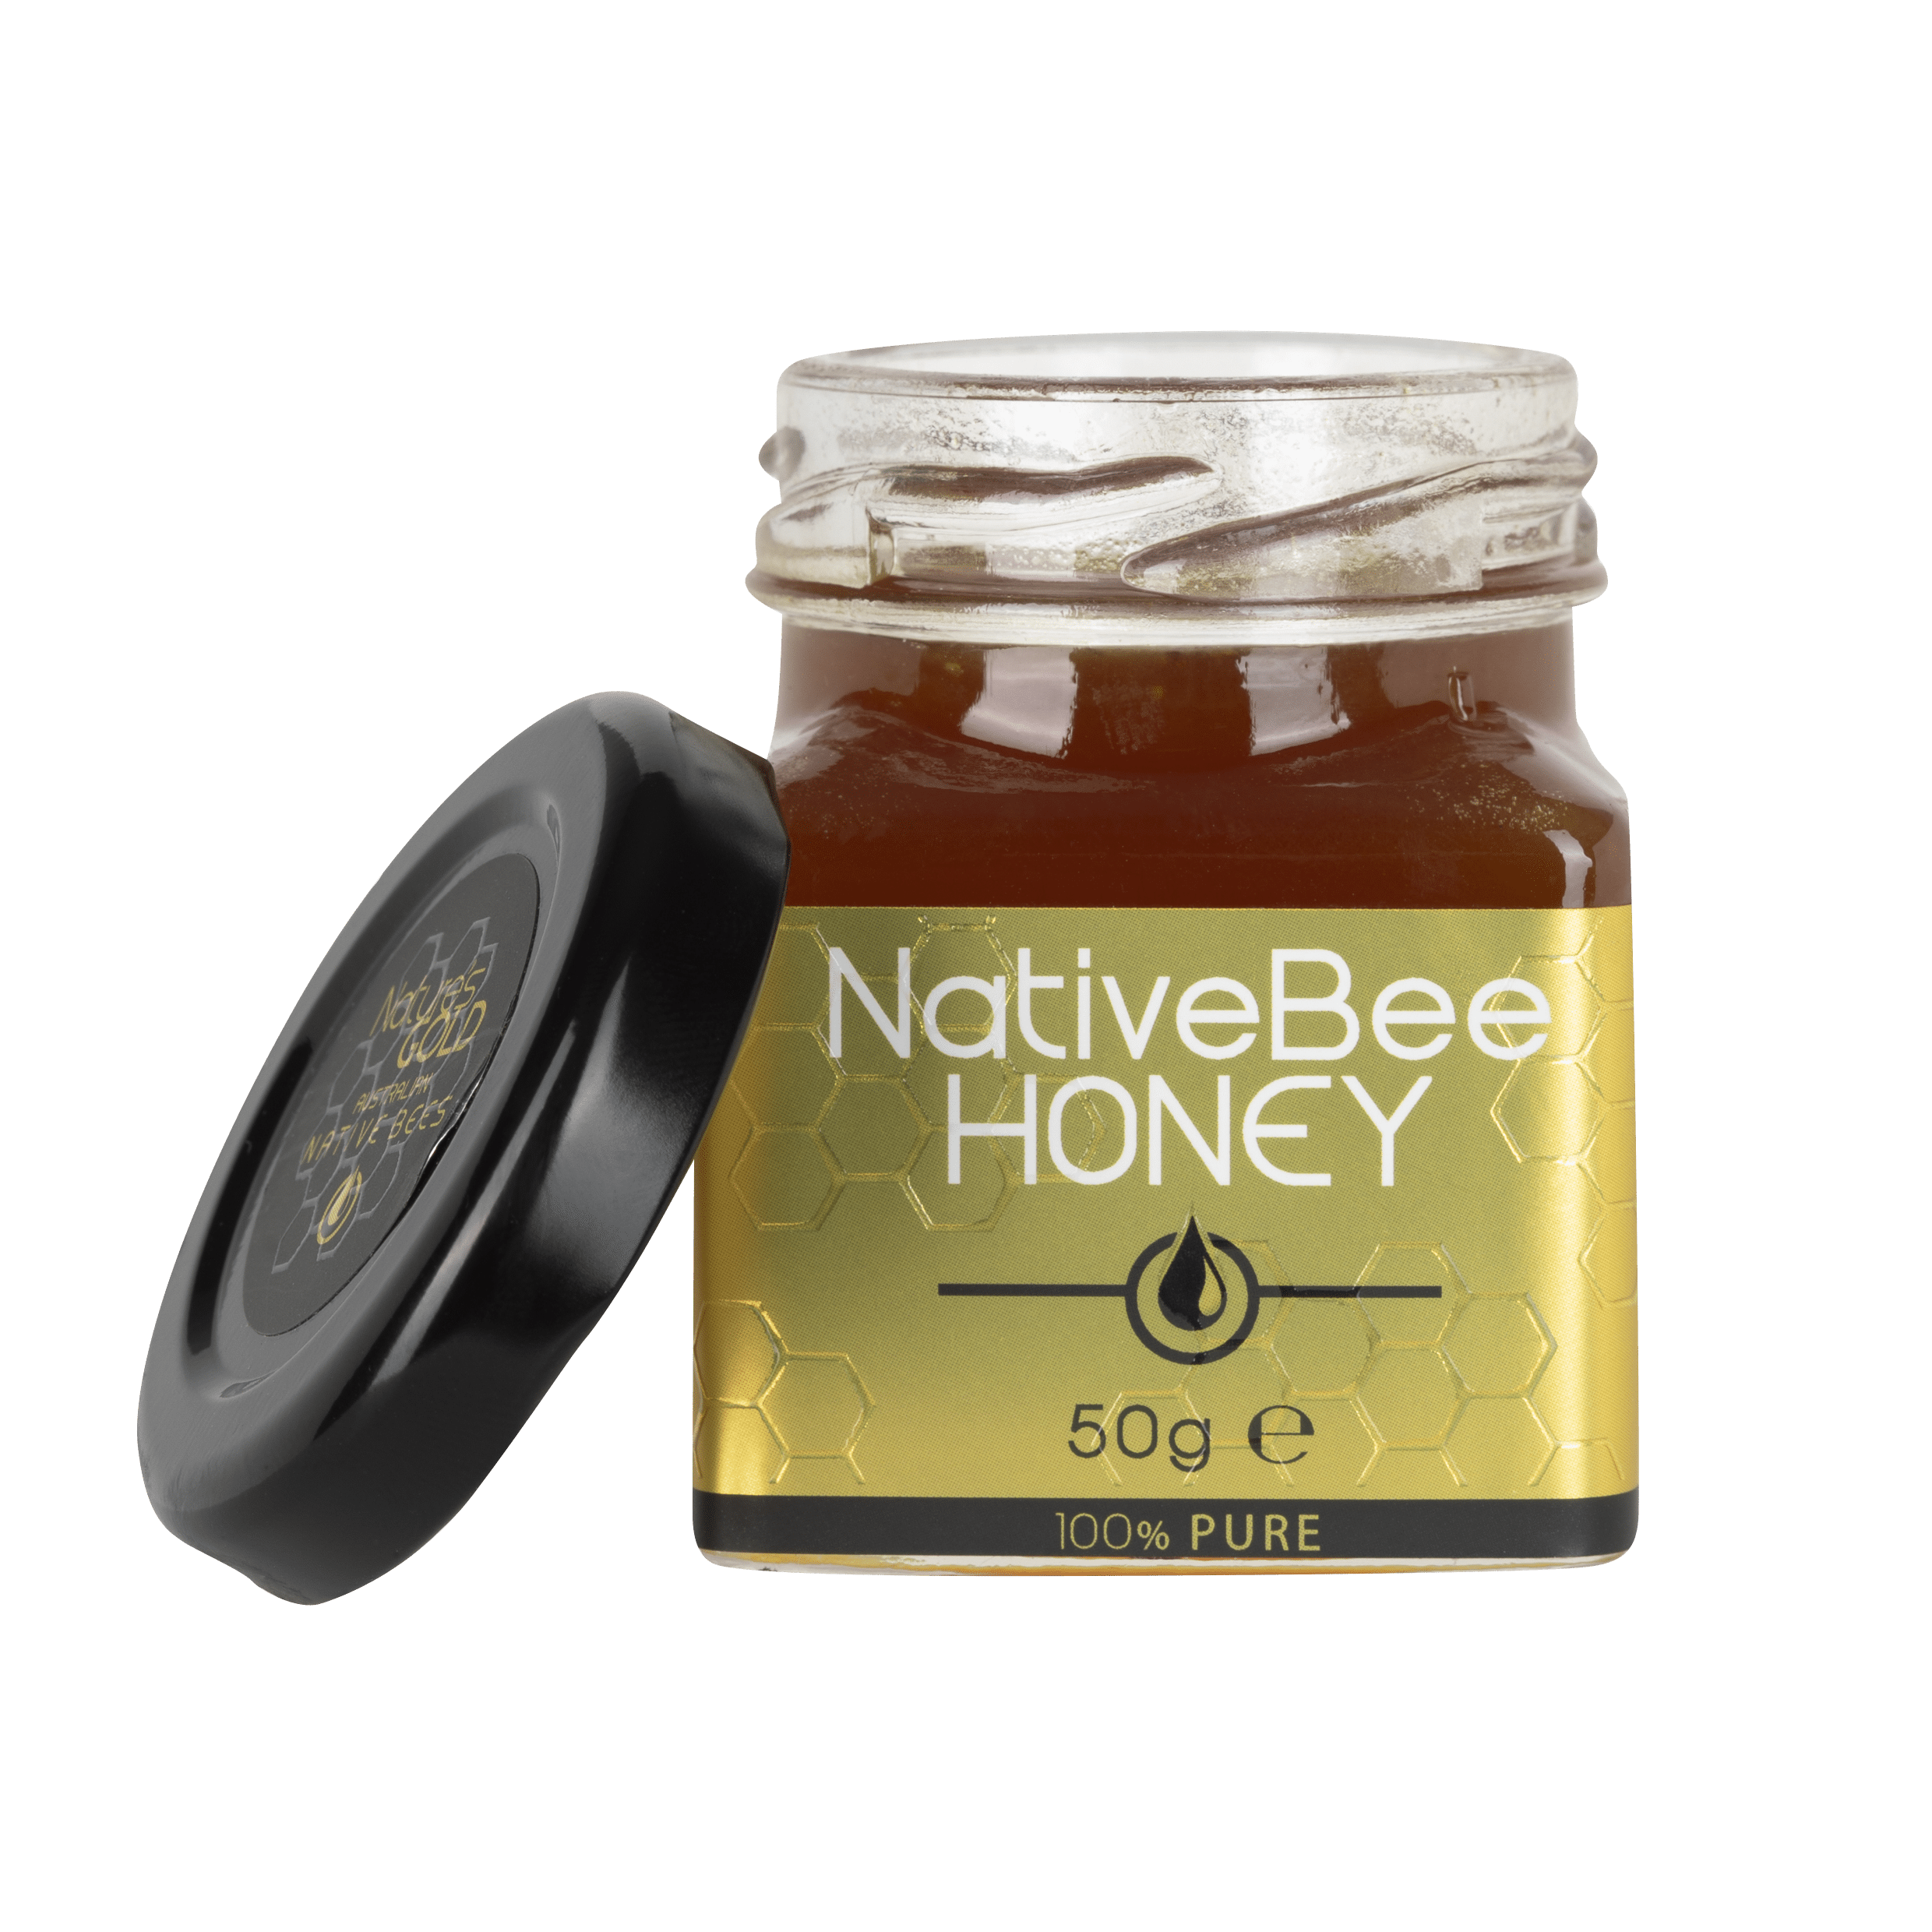 AUSTRALIAN NATIVE BEE HONEY